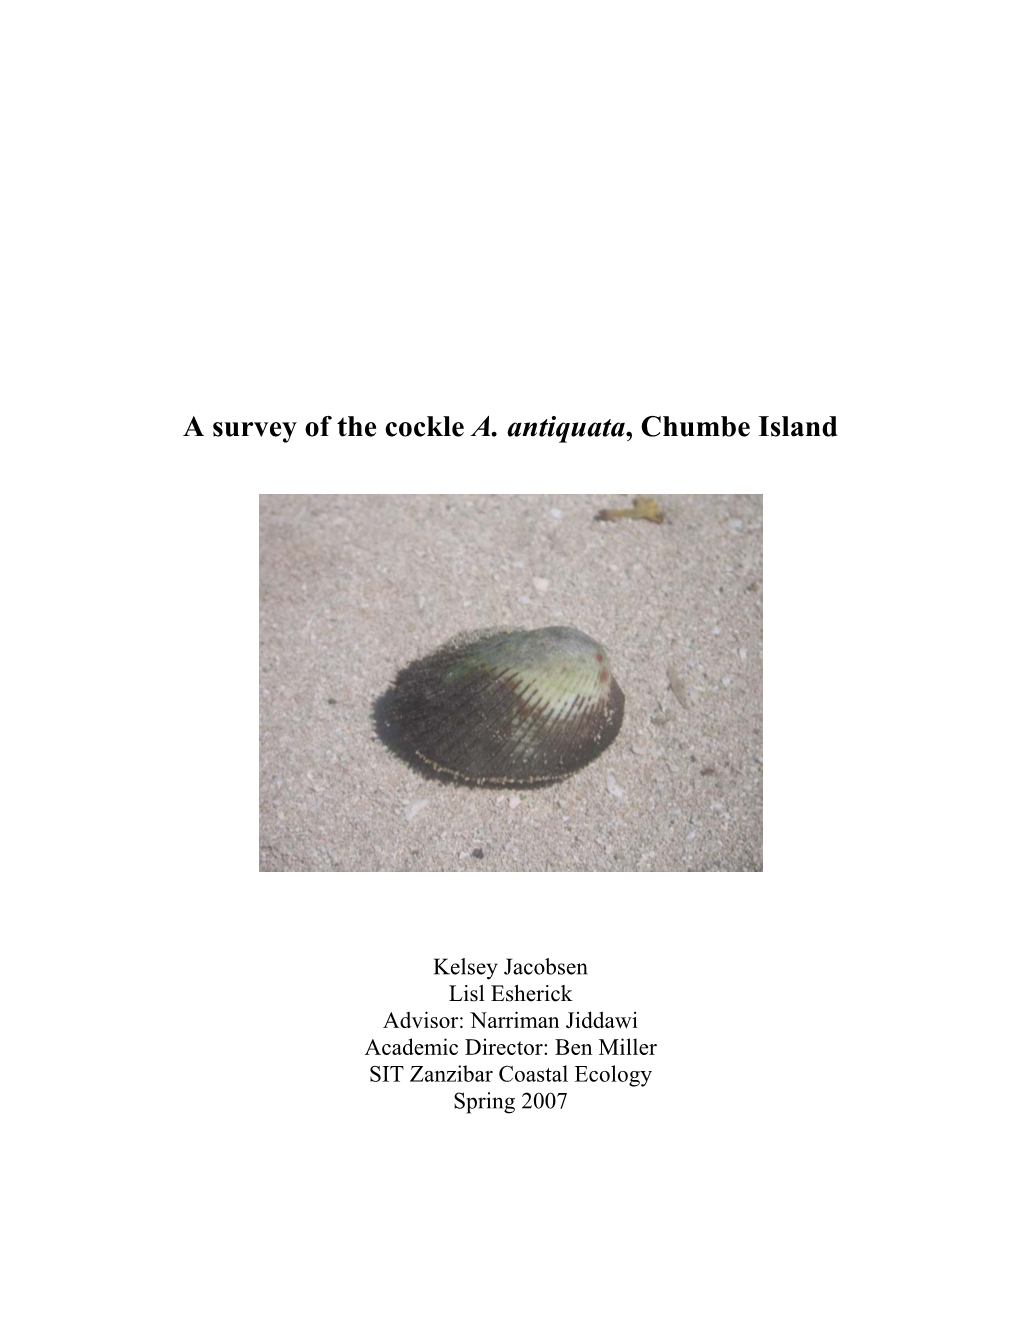 A Survey of the Cockle A. Antiquata, Chumbe Island